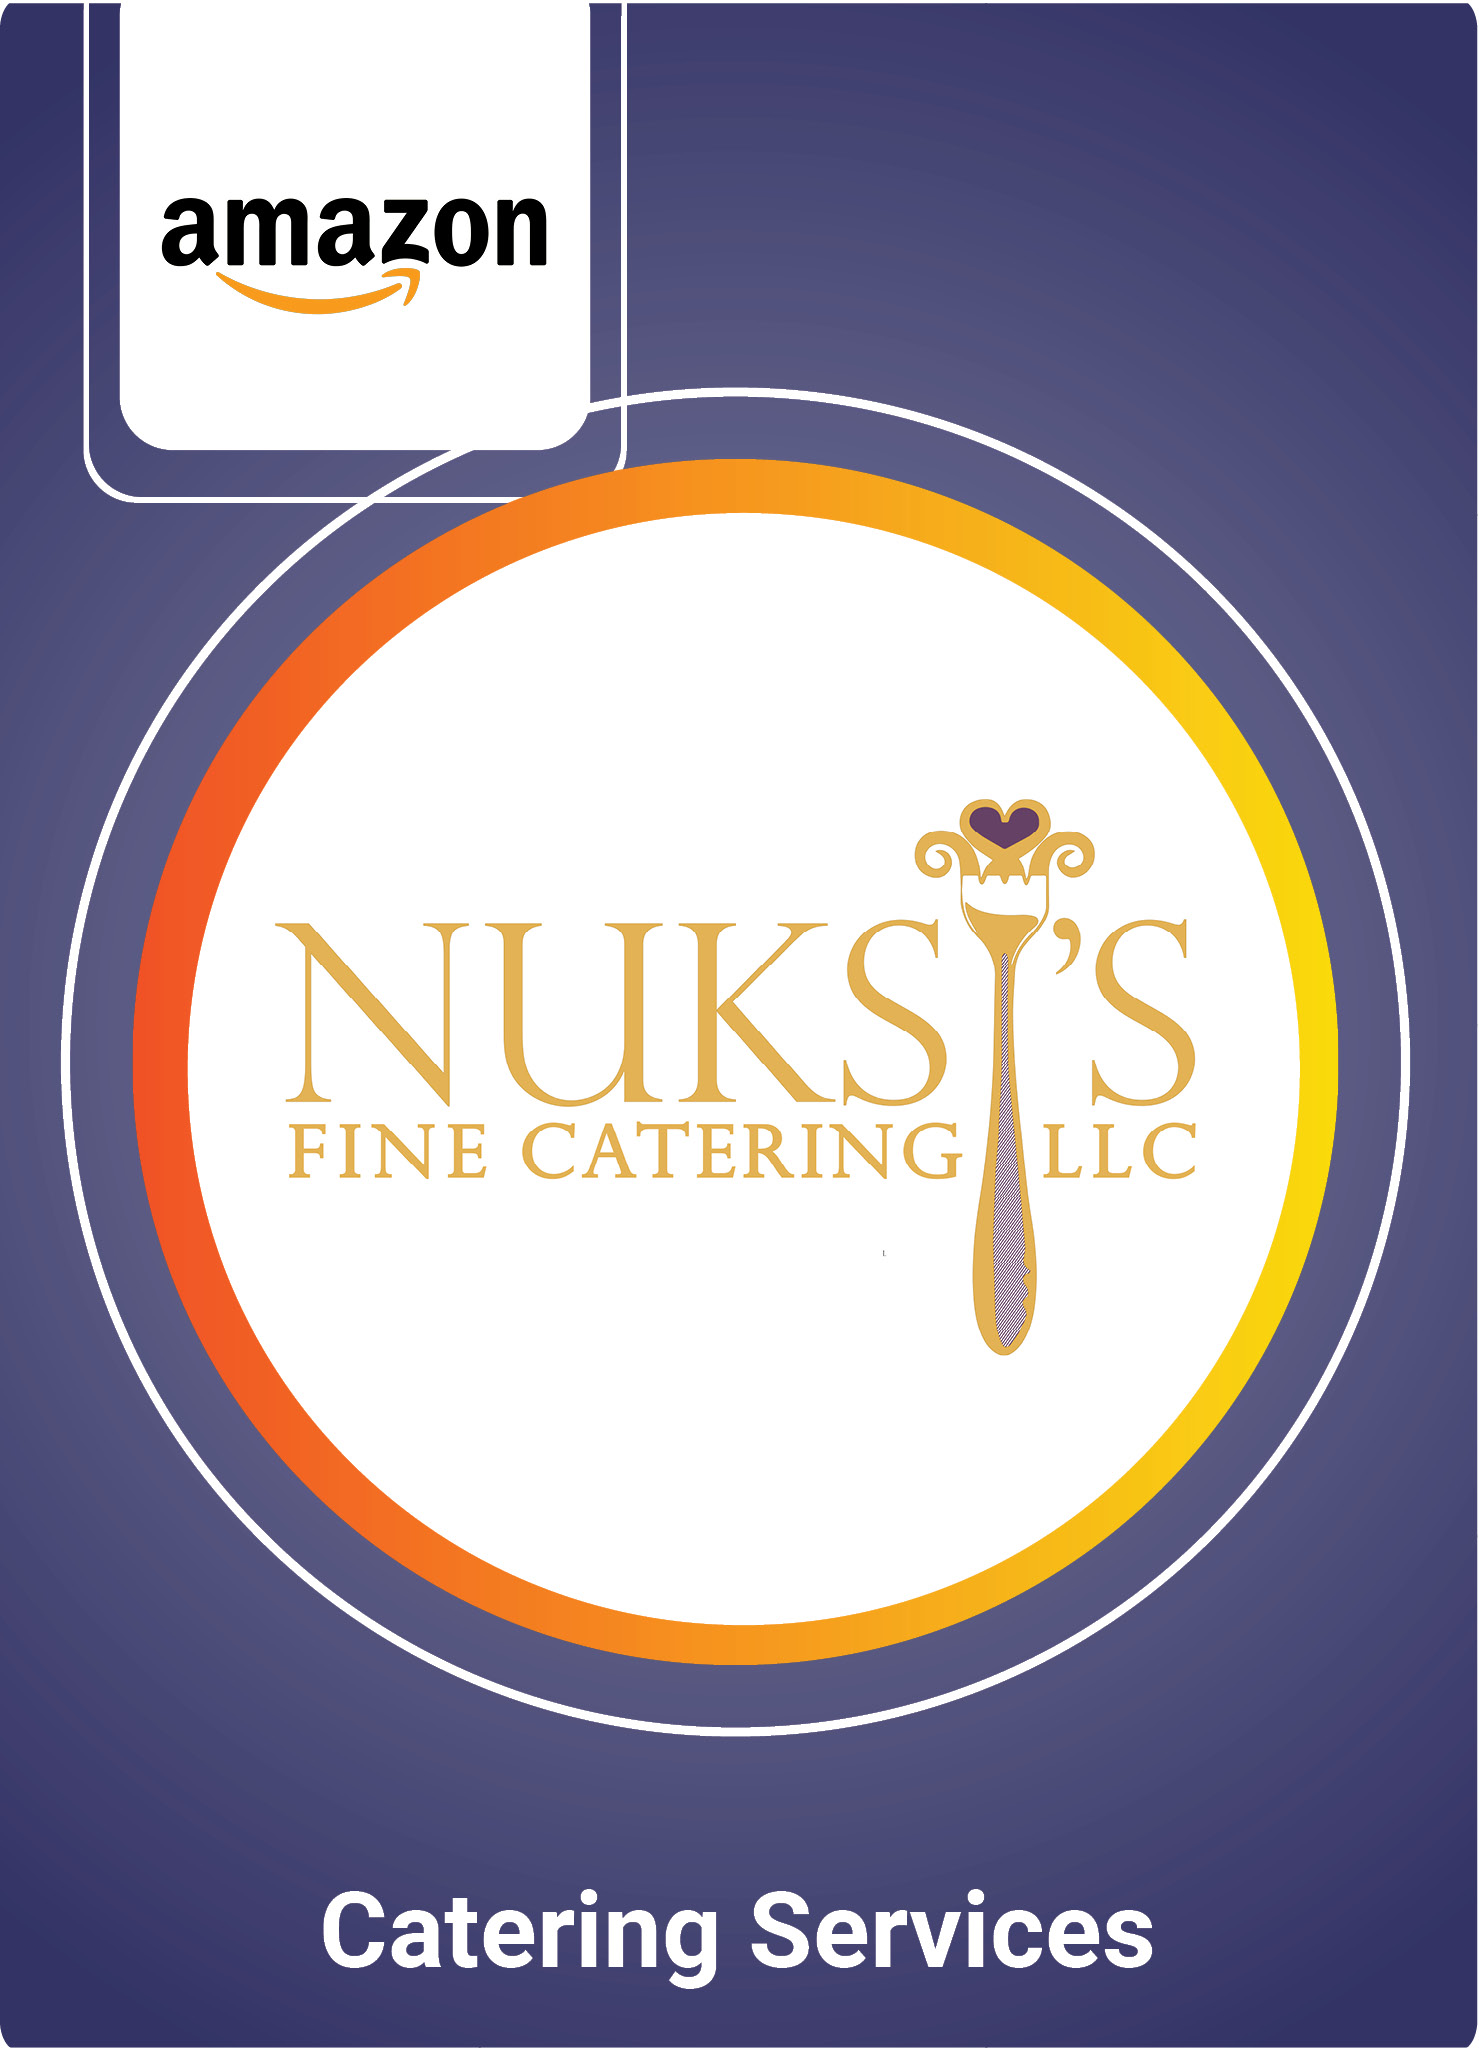 Nuksis Fine Catering LLC logo